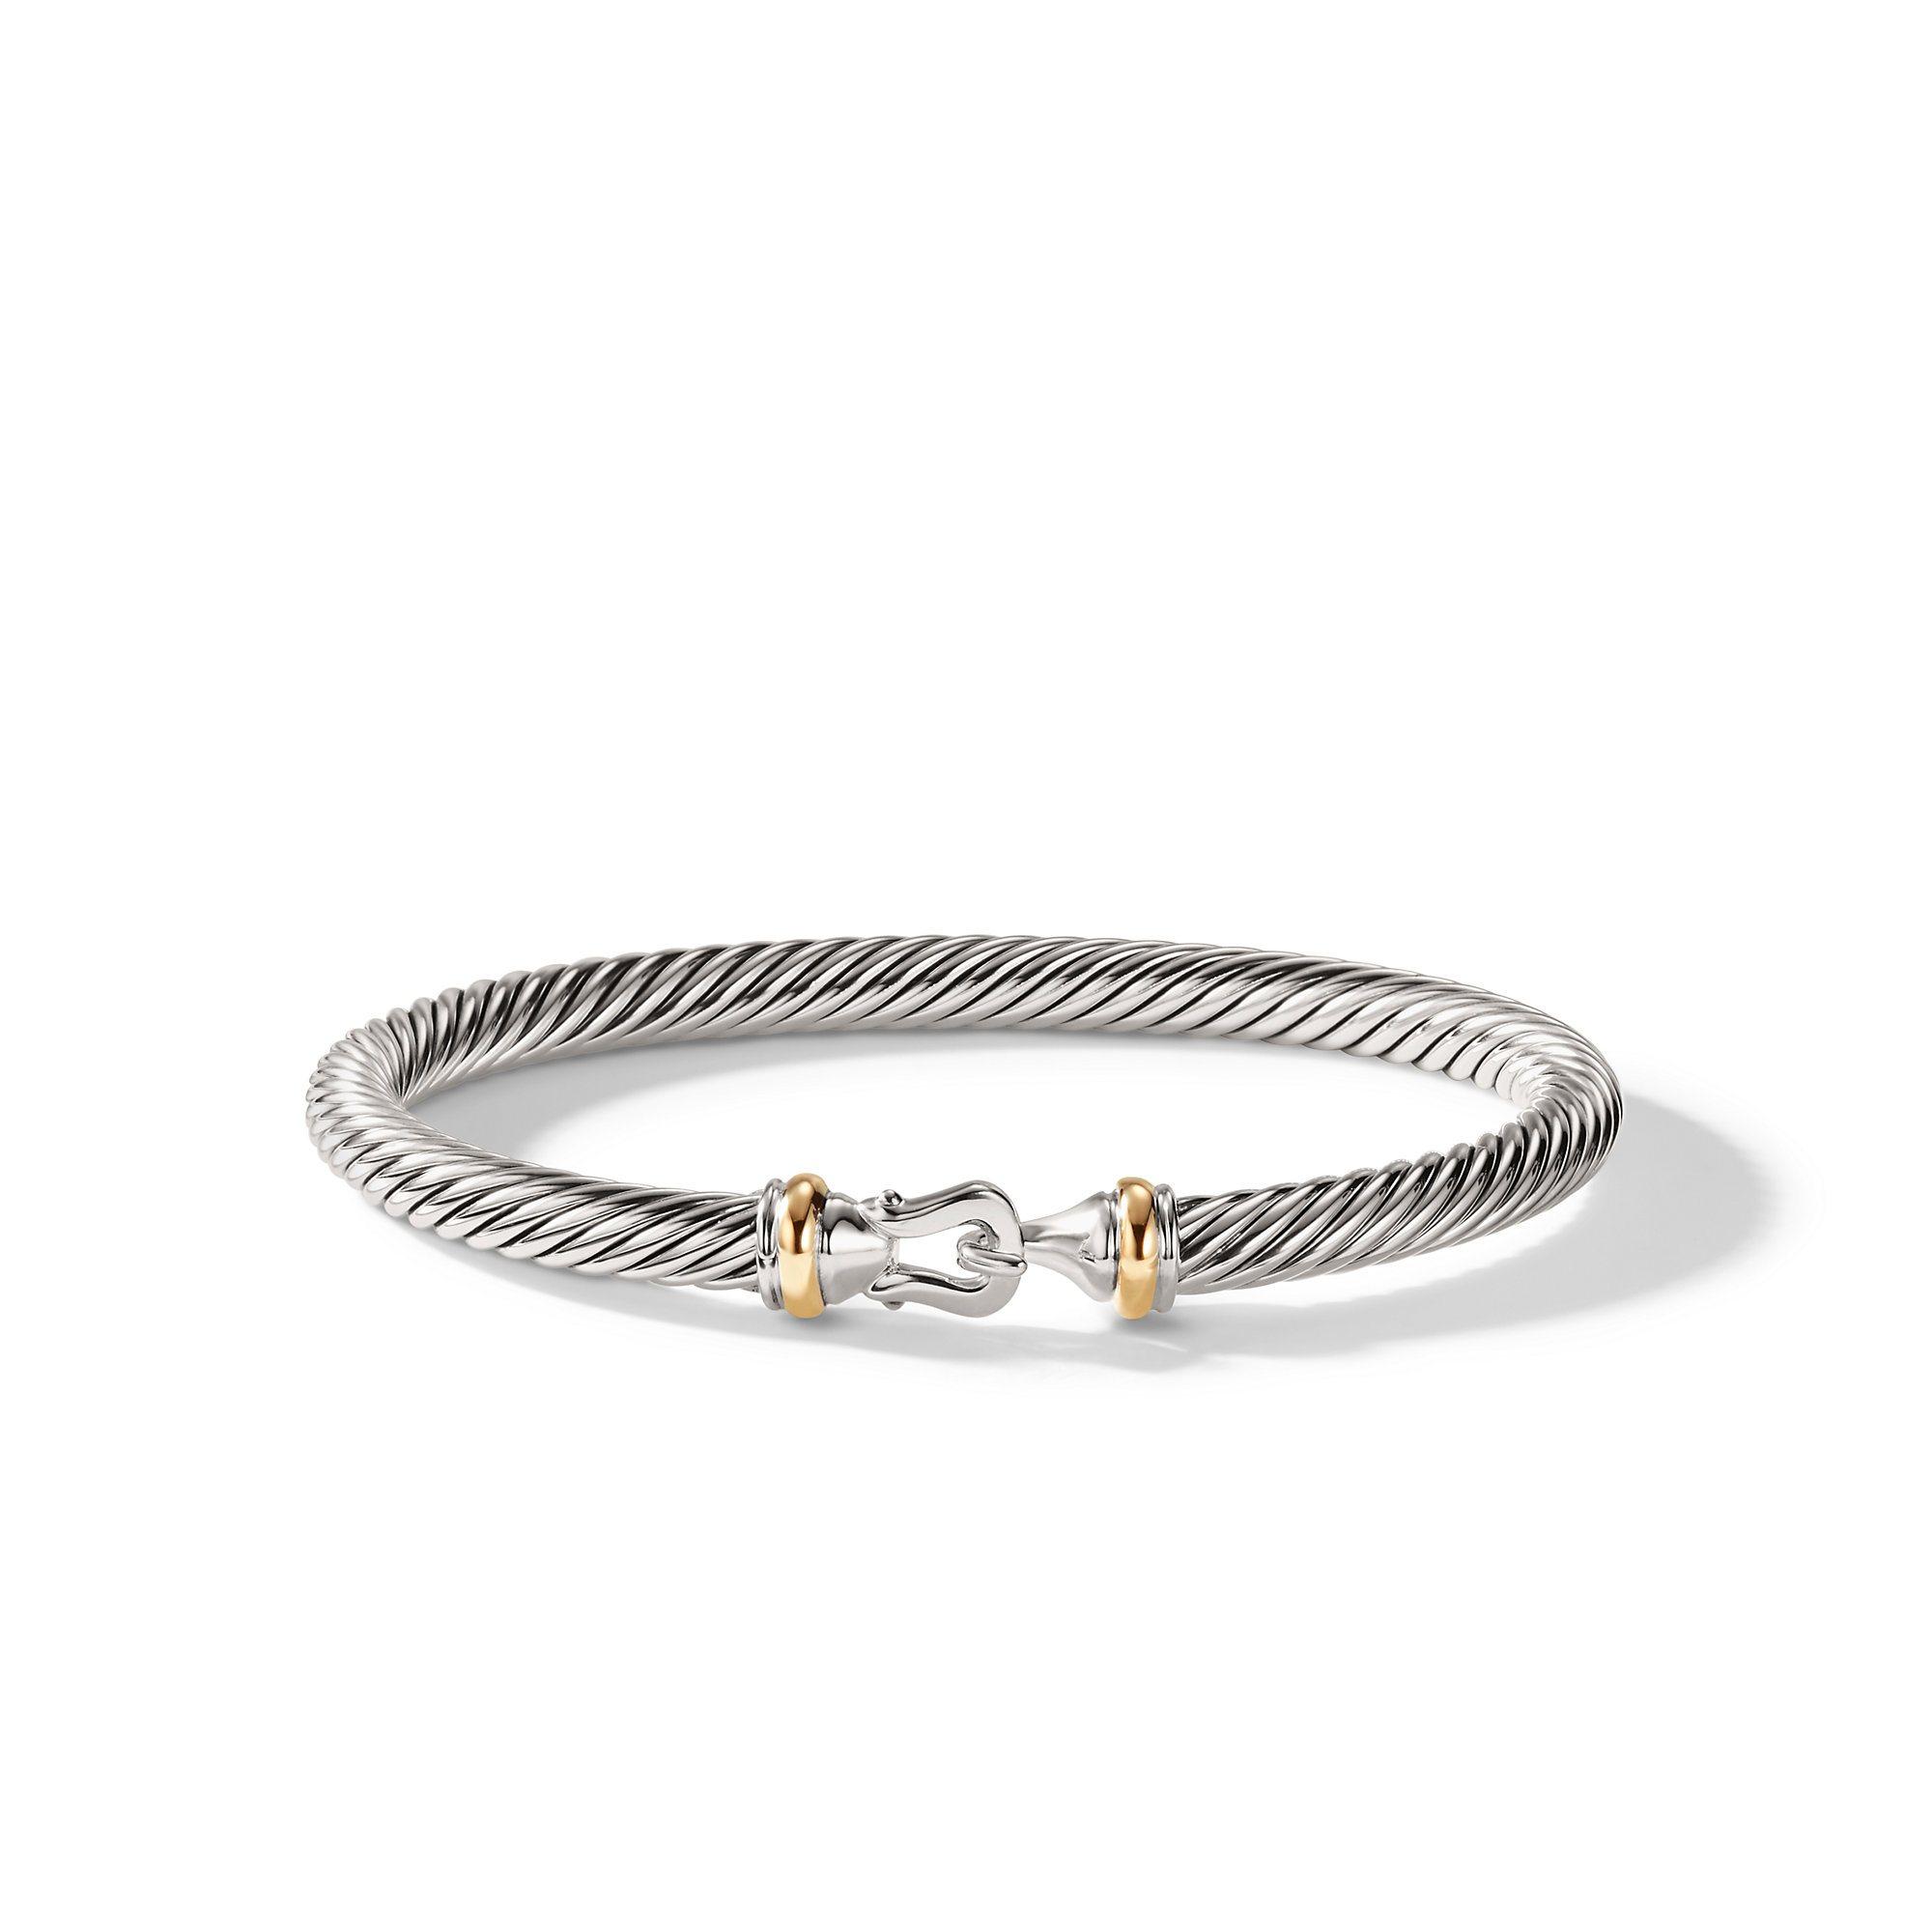 David Yurman 5mm Cable Buckle Bracelet with 18k Yellow Gold, size medium